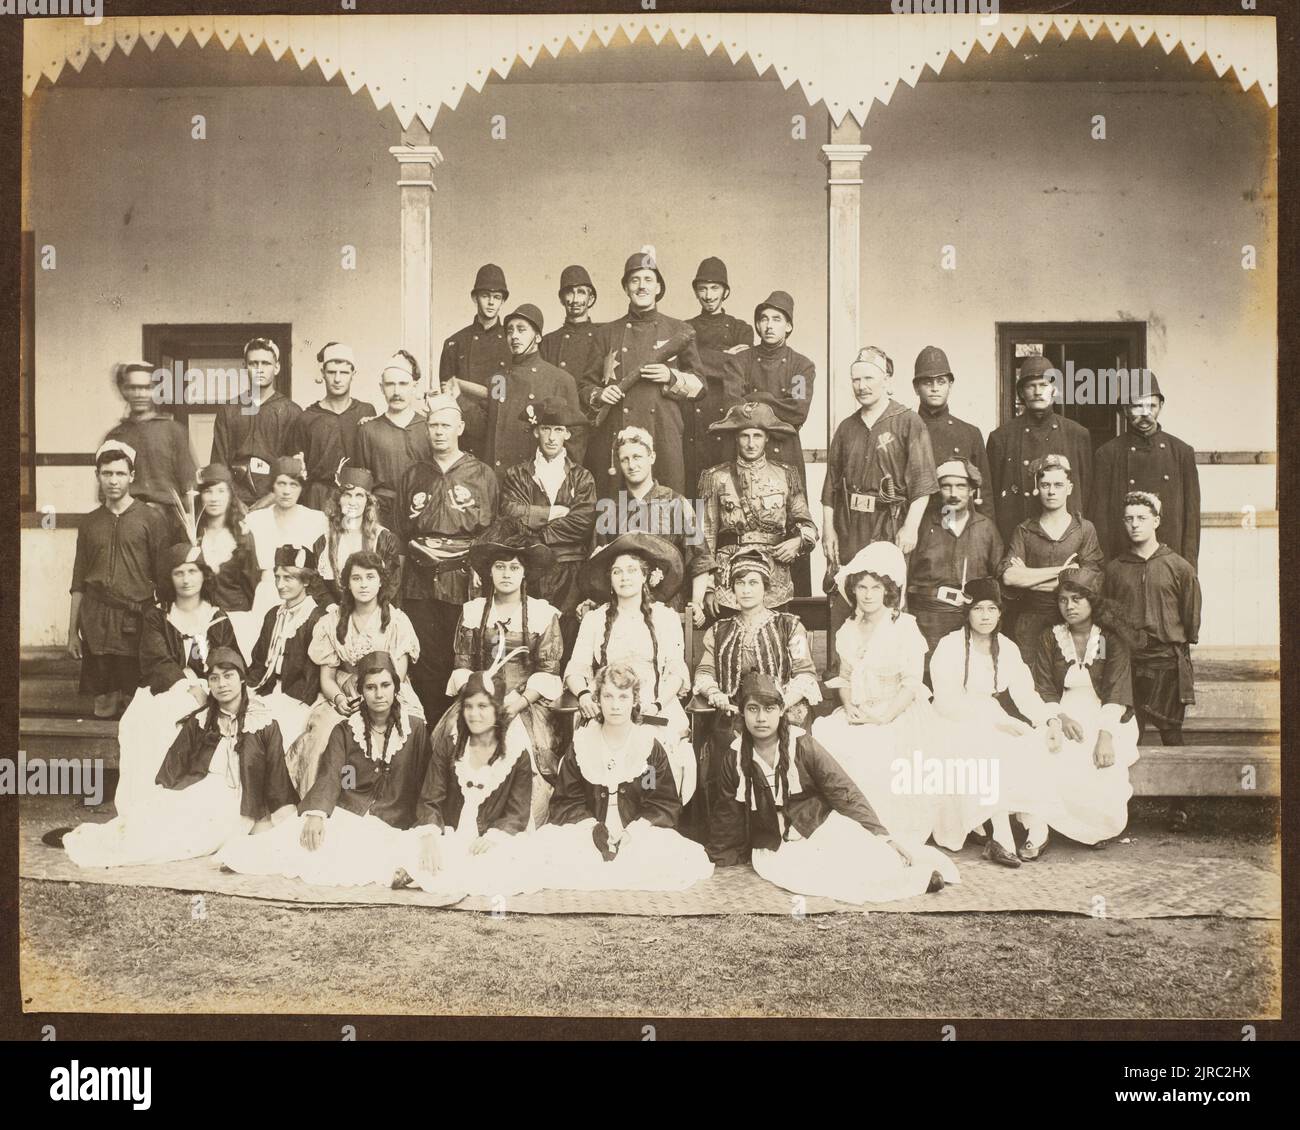 Group in theatrical costumes. From the album: Samoa, circa 1916, Sāmoa, maker unknown. Stock Photo